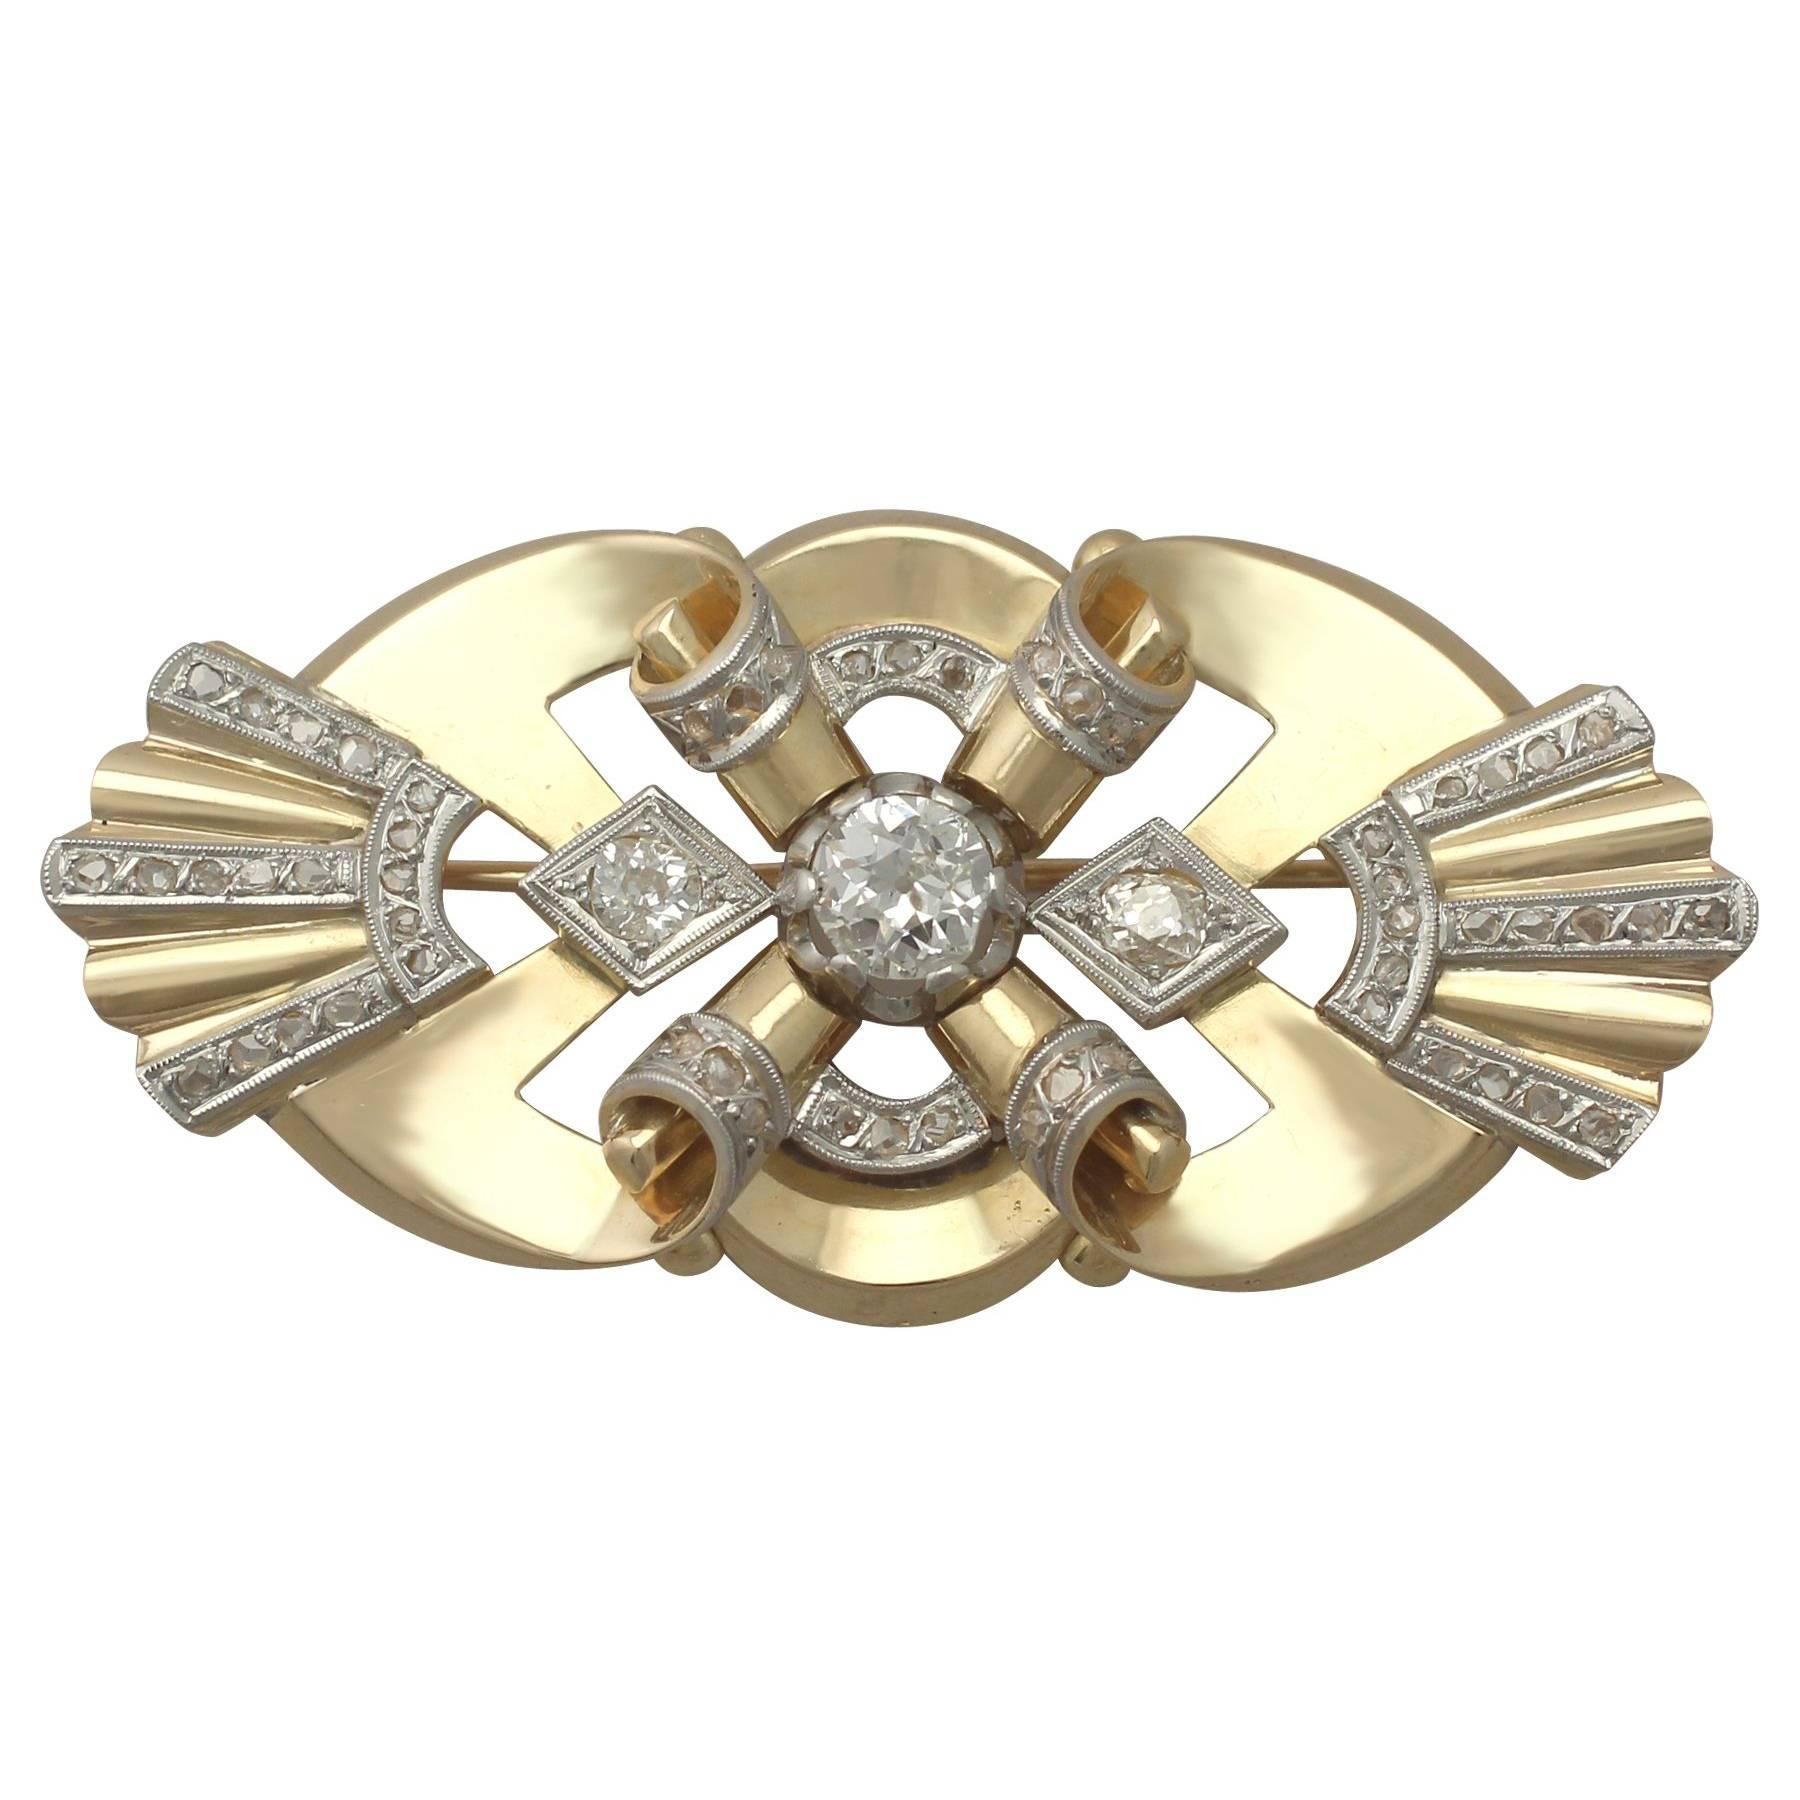 1940s Art Deco Style 2.65 Carat Diamond and 14 k Yellow Gold Brooch